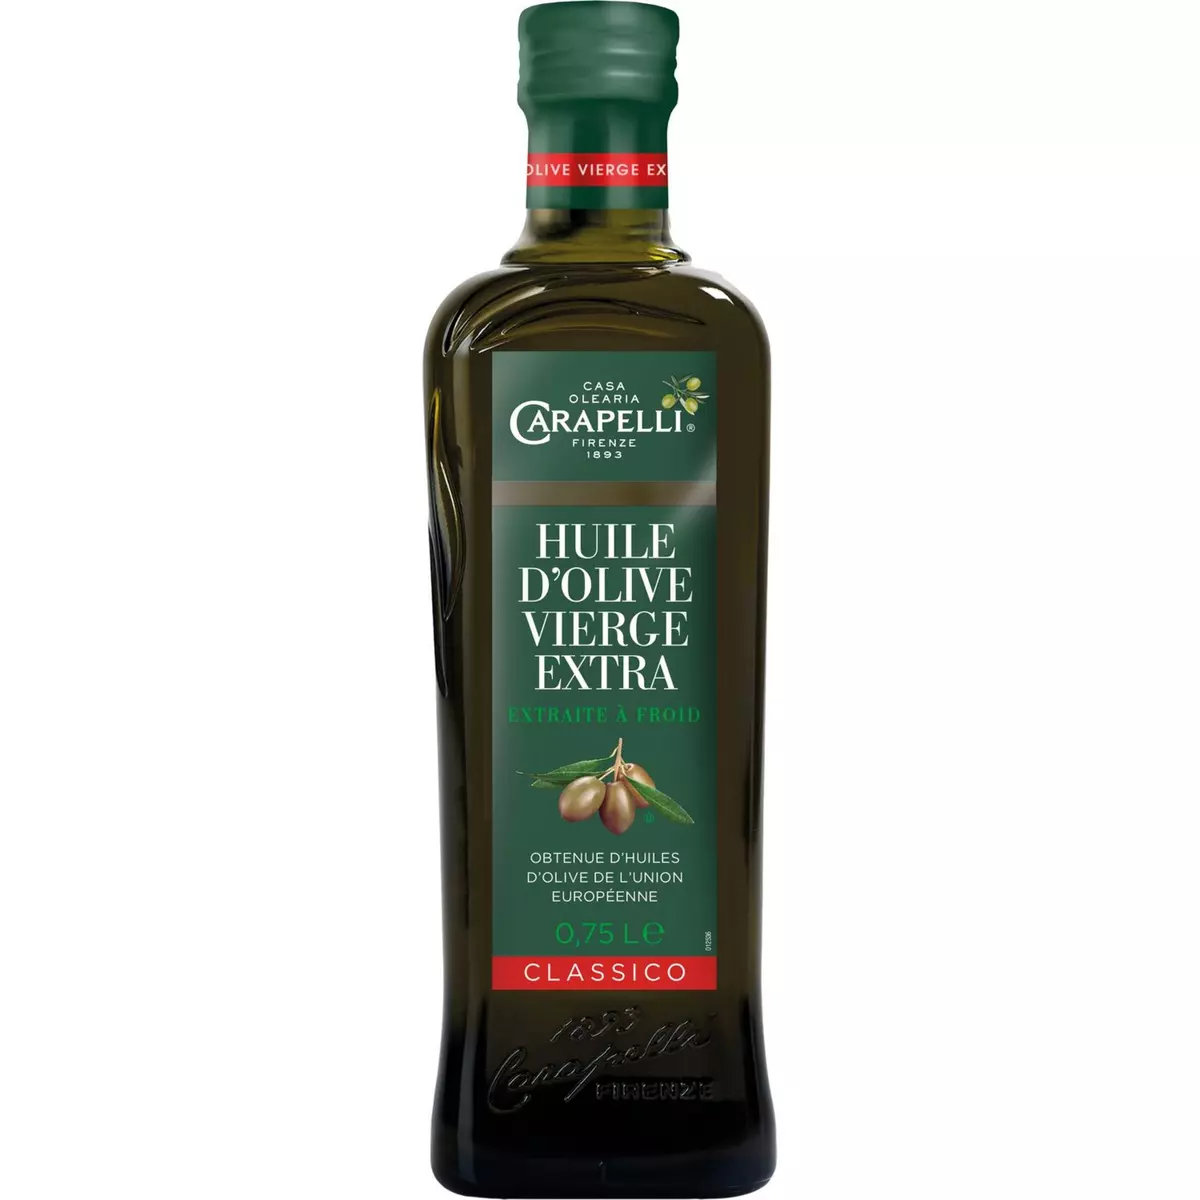 CARAPELLI Huile d'olive extra vierge classico extraite à froid 75cl